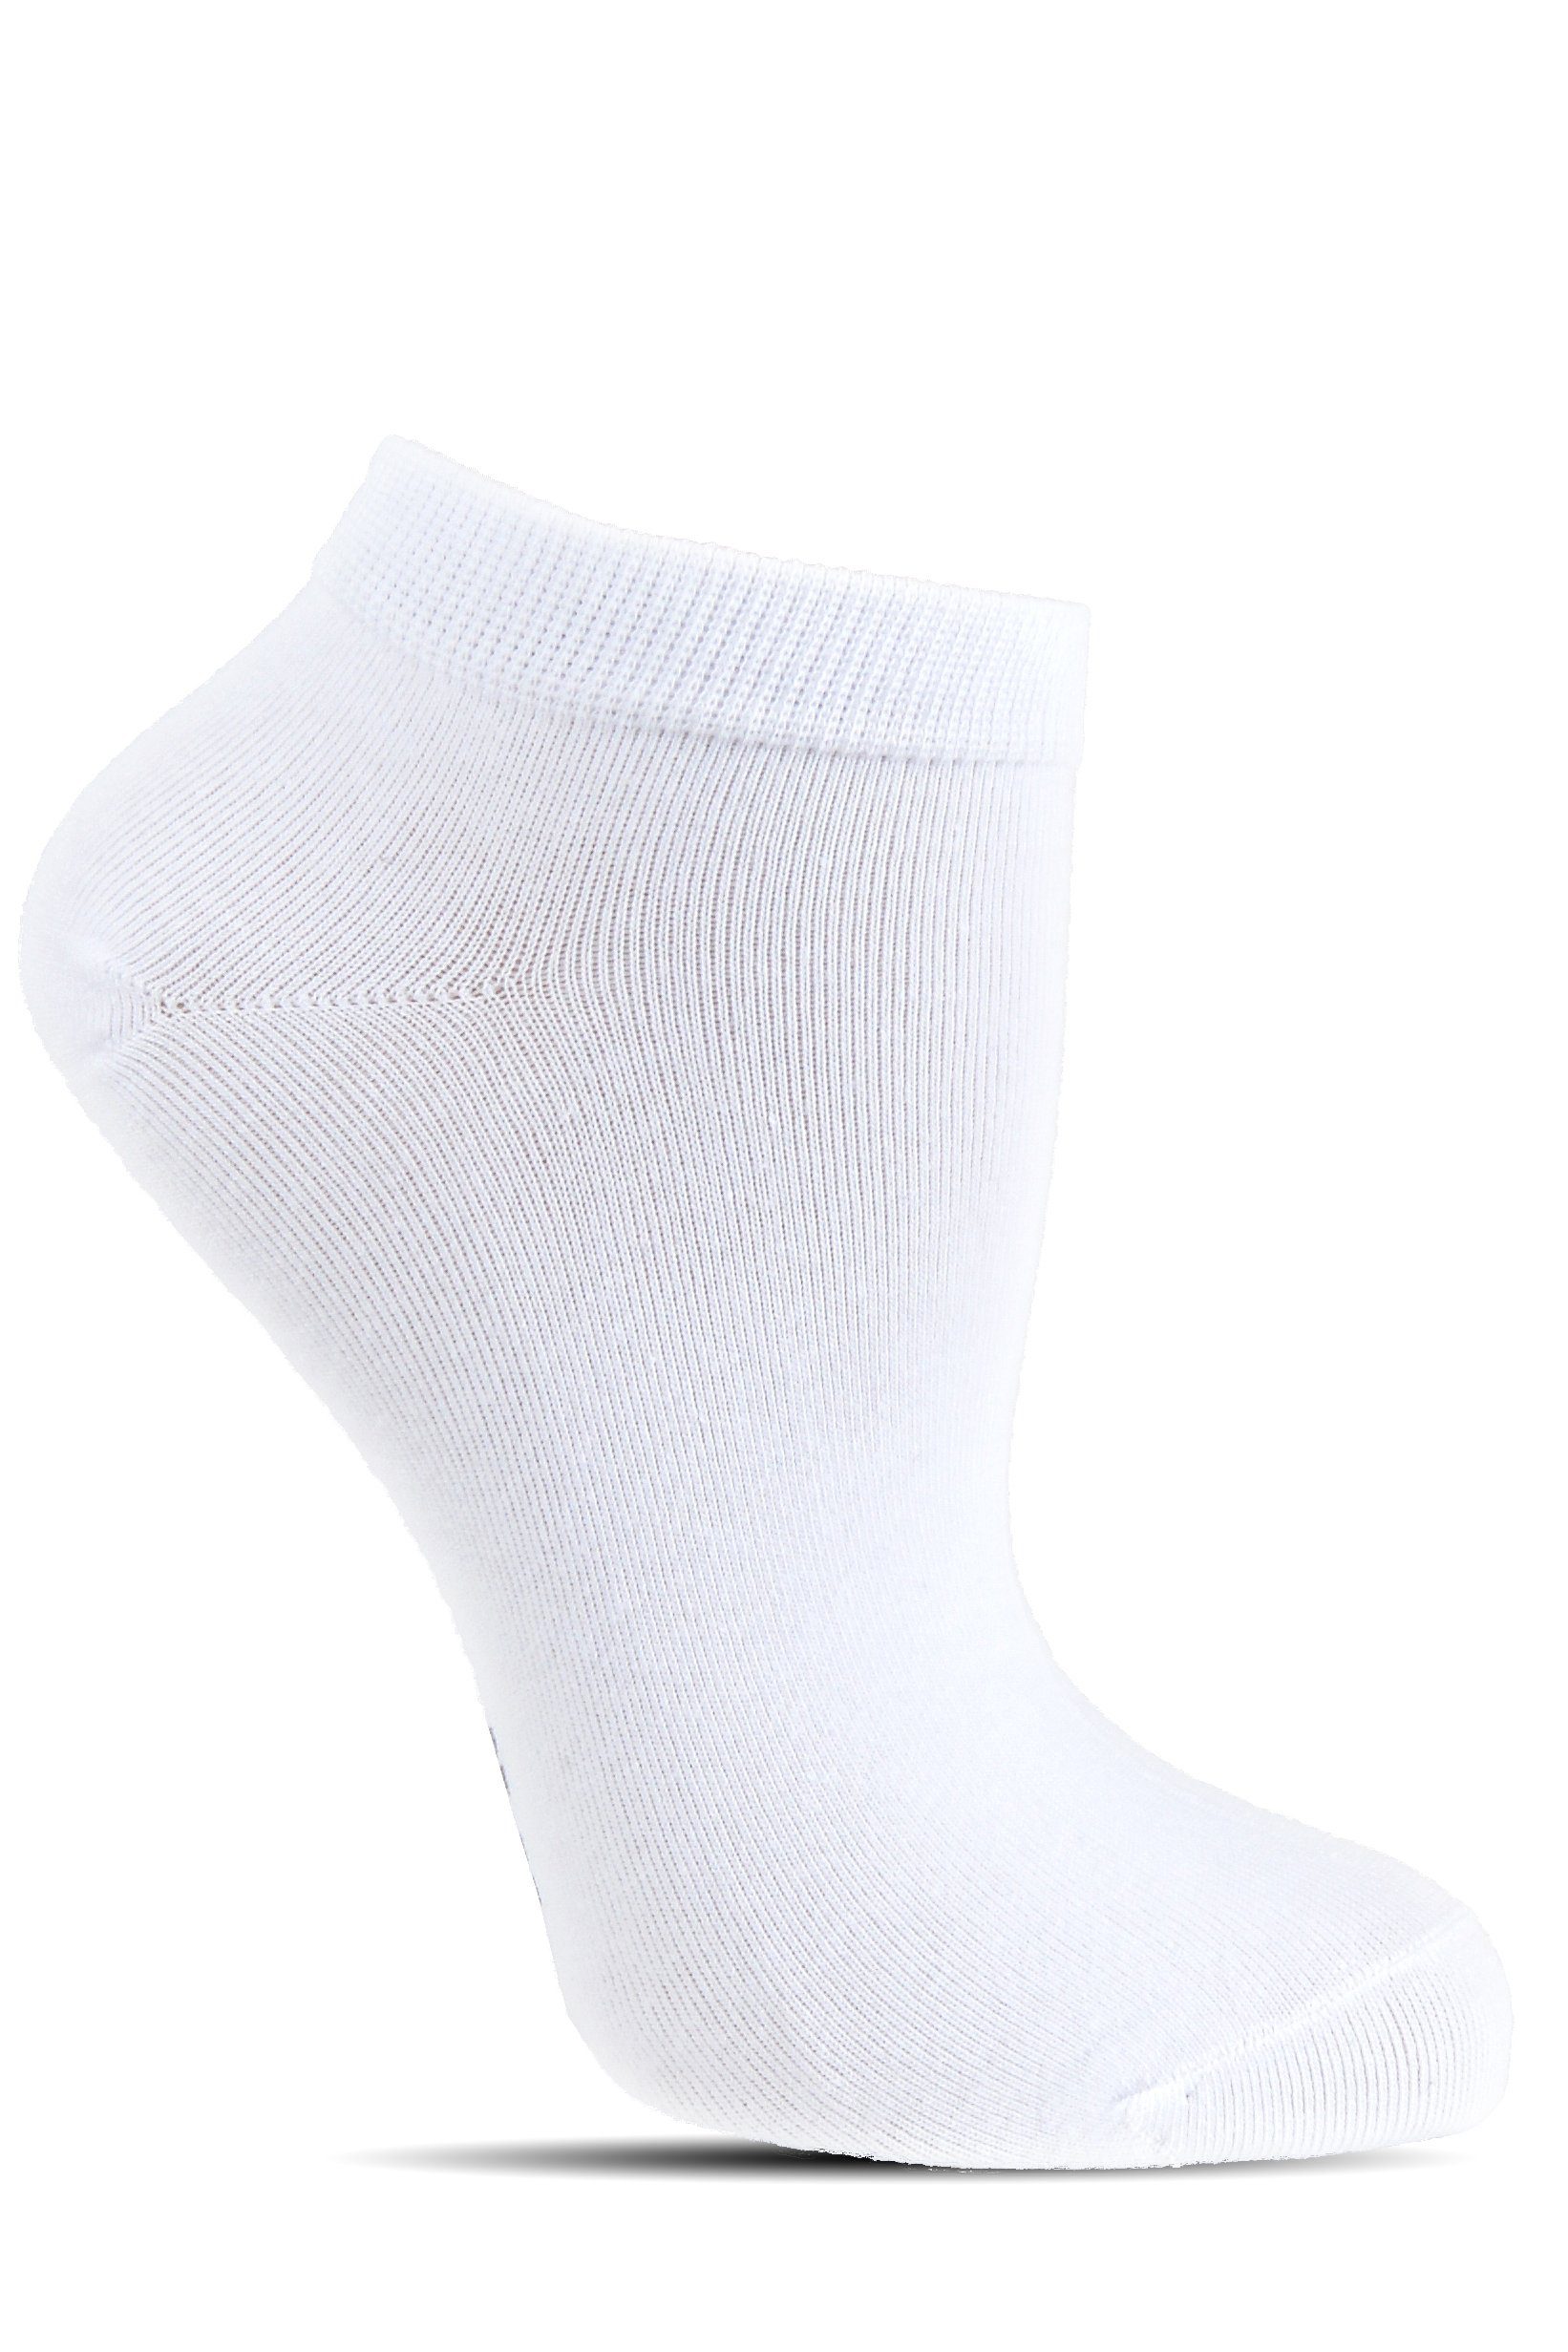 Damen + Herren Socked Kurzsocken Schwarz/Weiß (12 Schwarz Baumwolle, / Paar) Sneakersocken Weiß